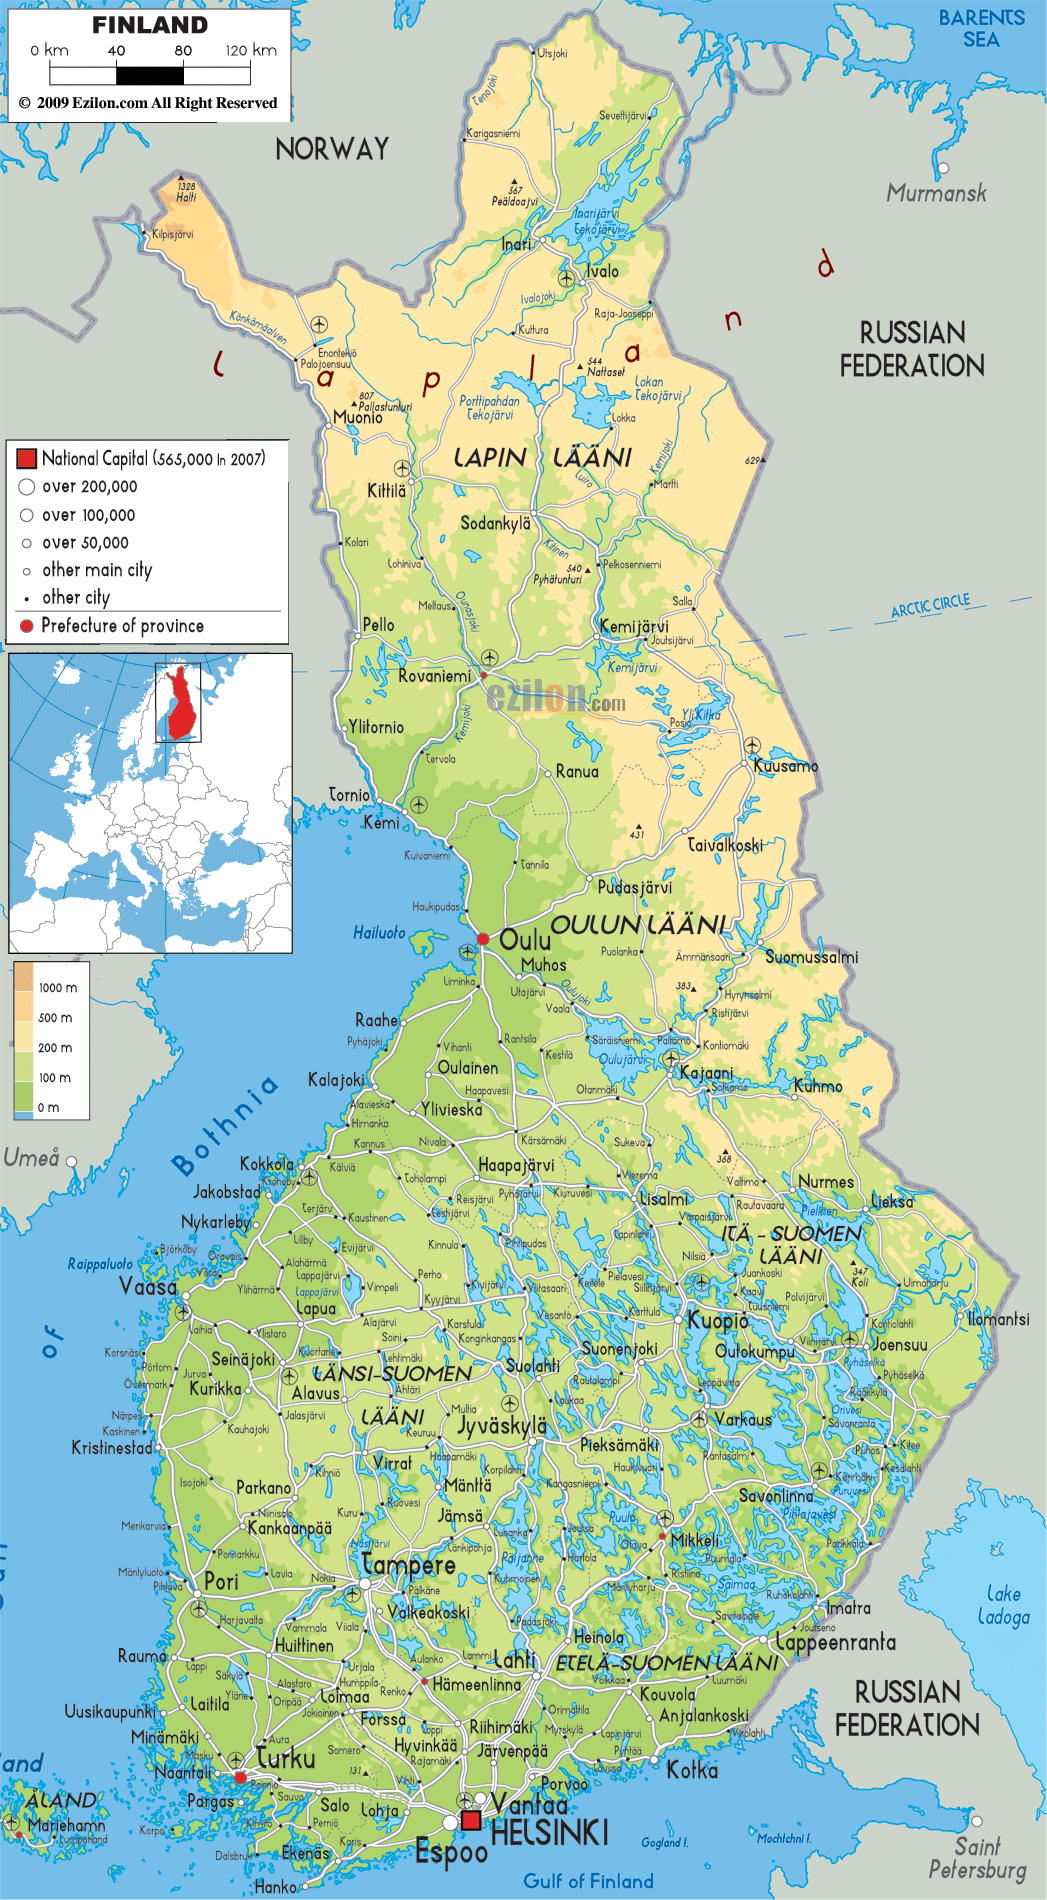 Map of Finland_3.jpg